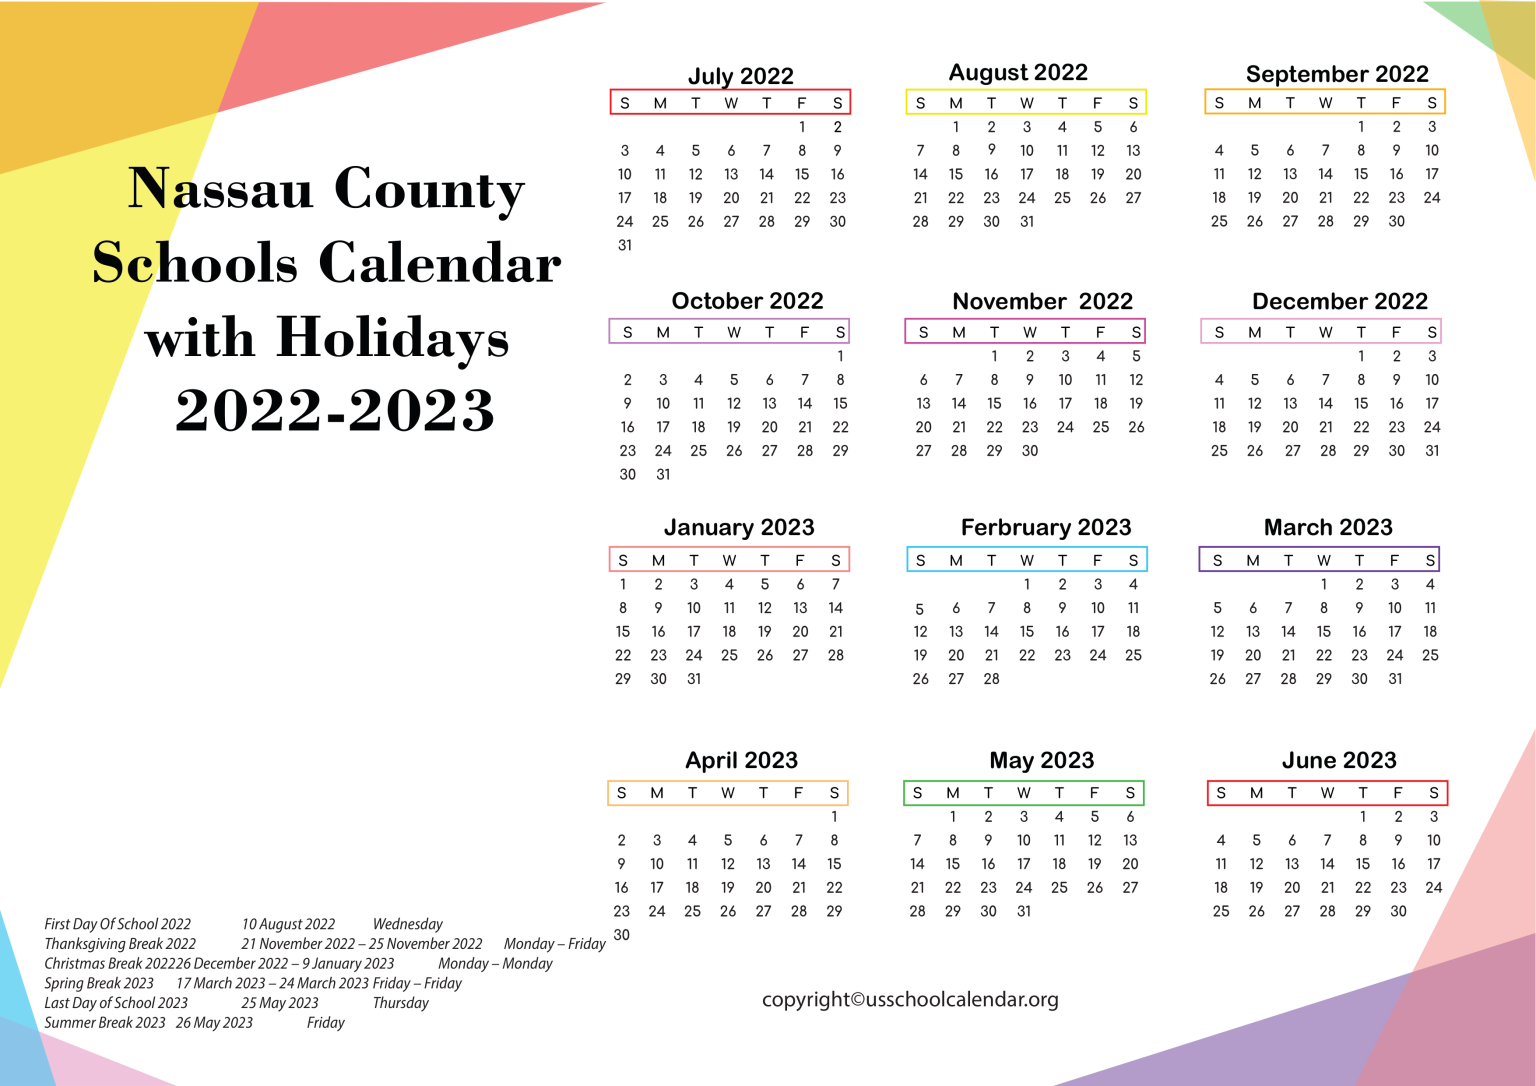 Nassau County Schools Calendar with Holidays 20222023